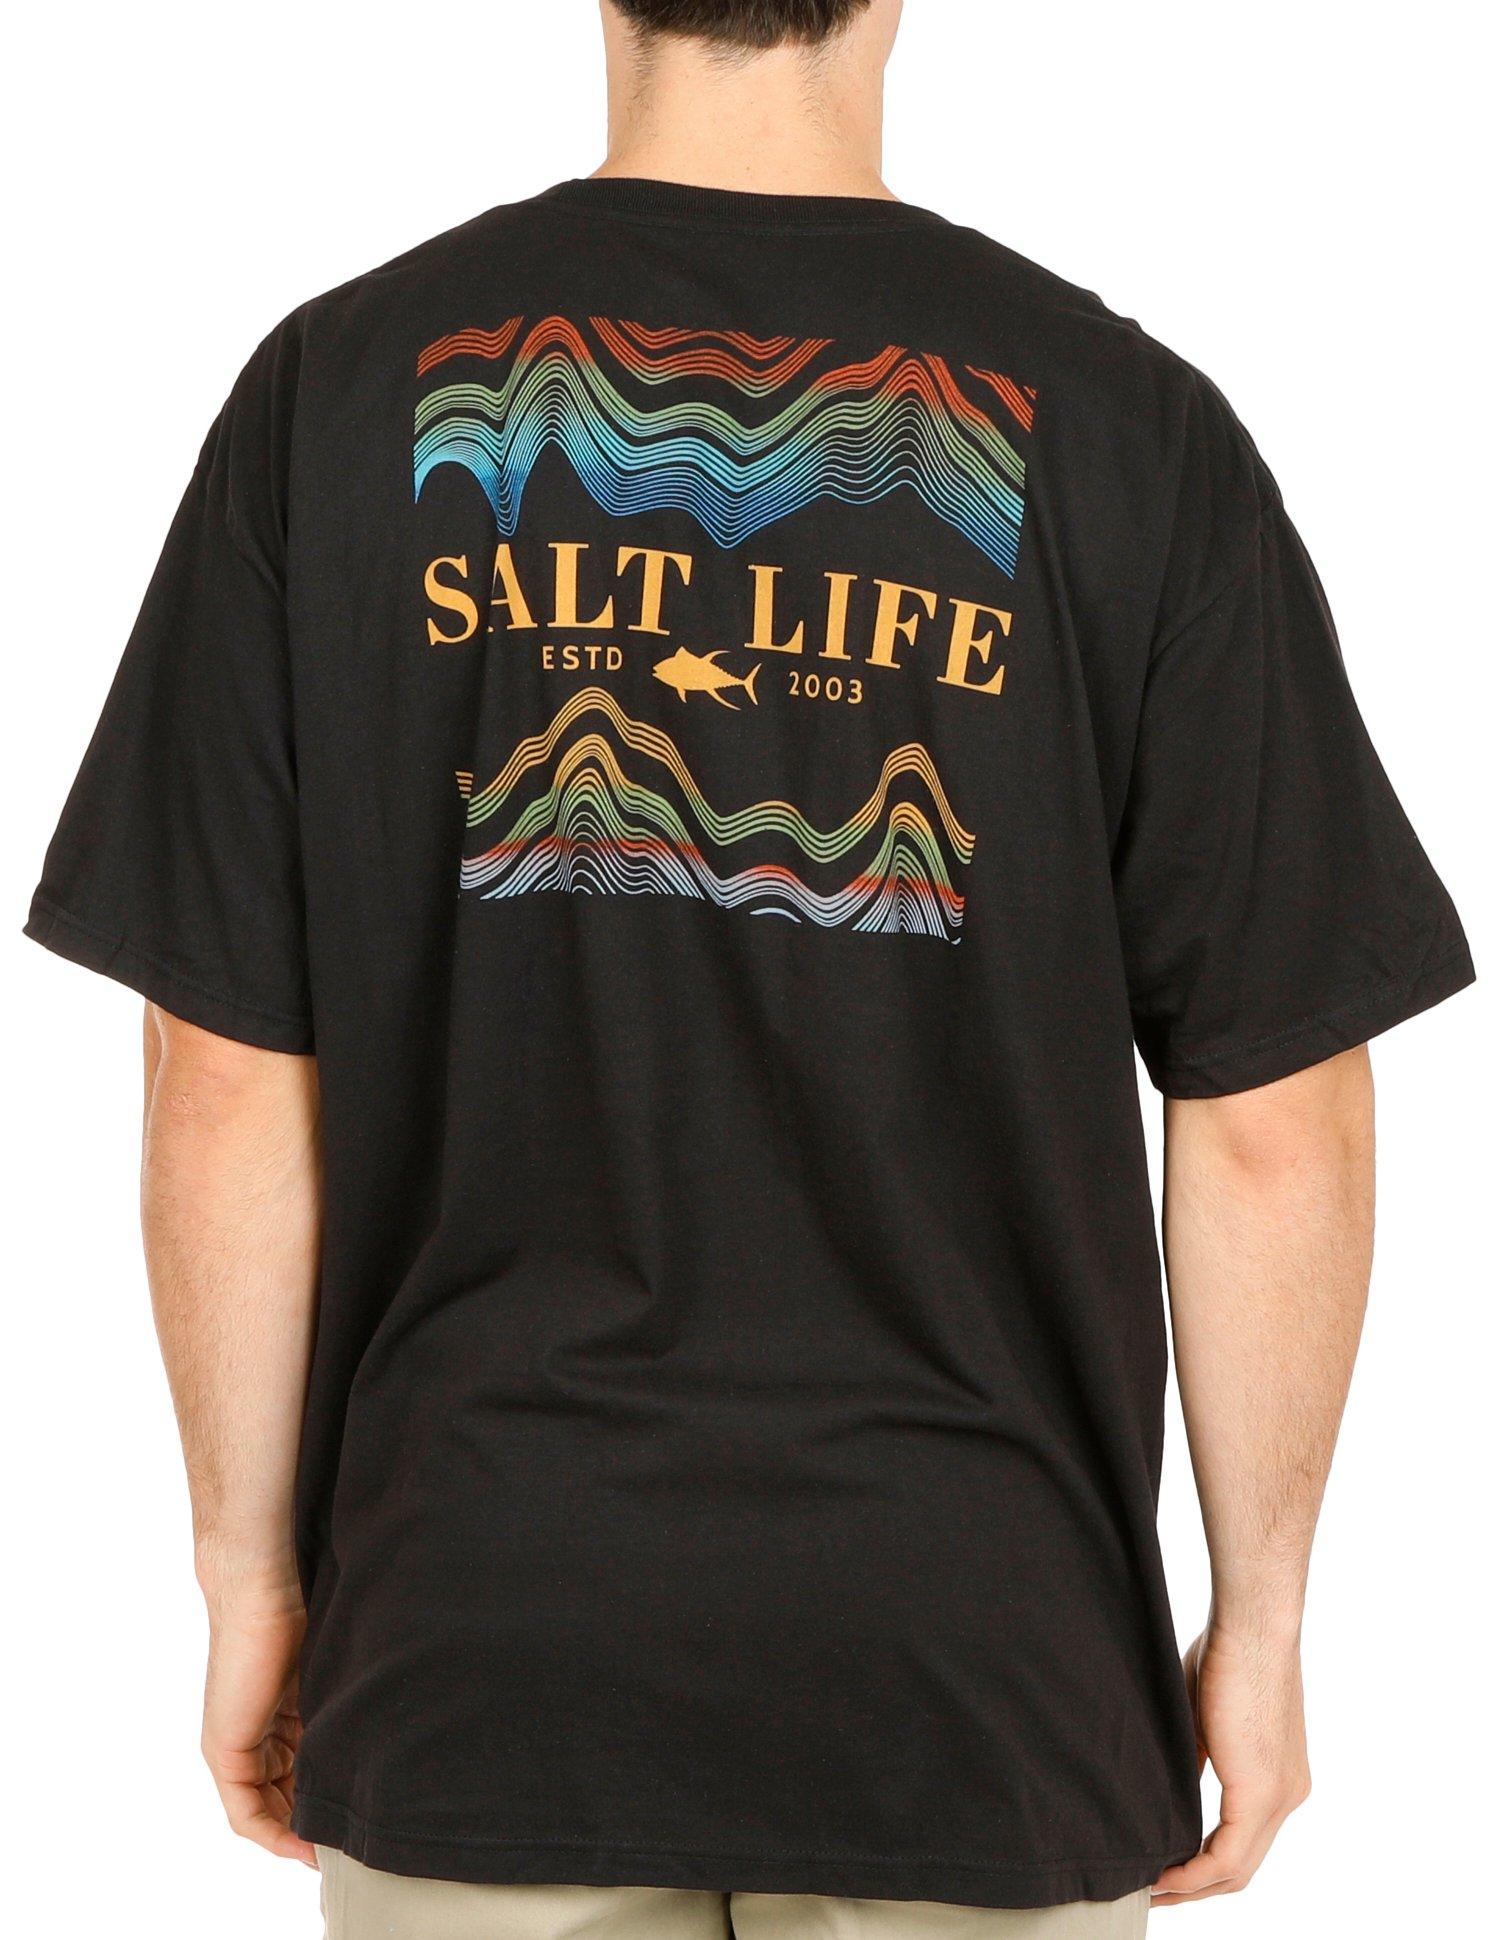 Salt Life Mens Fish Finder Short Sleeve T-Shirt